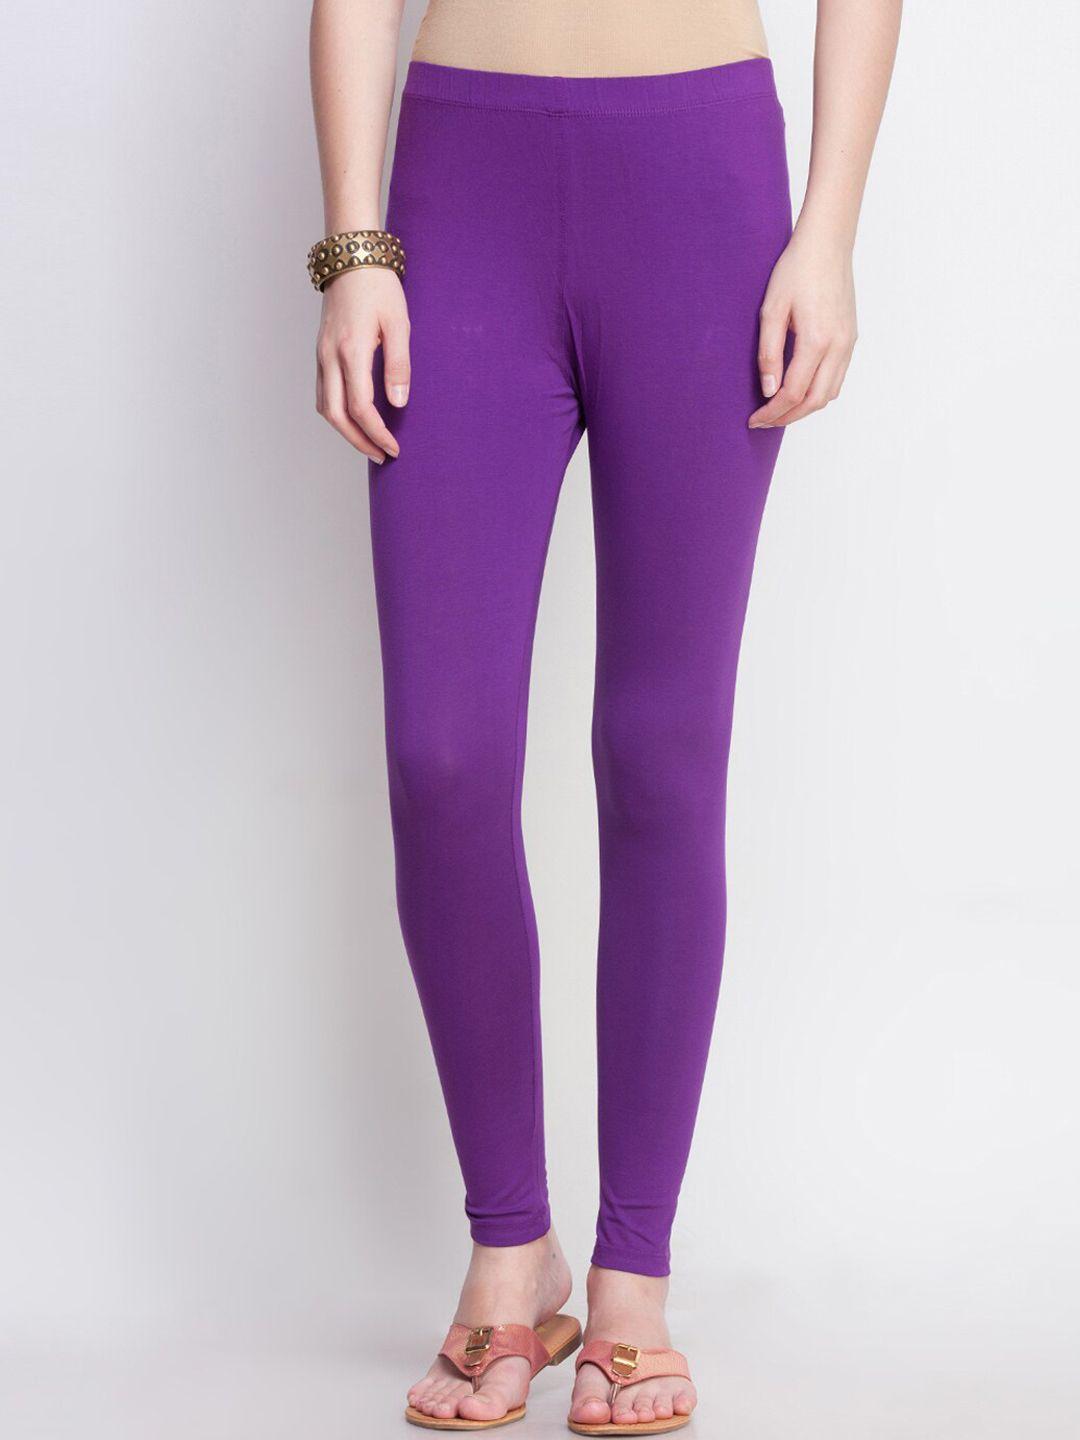 dollar-missy-women-purple-solid-slim-fit-cotton-ankle-length-leggings